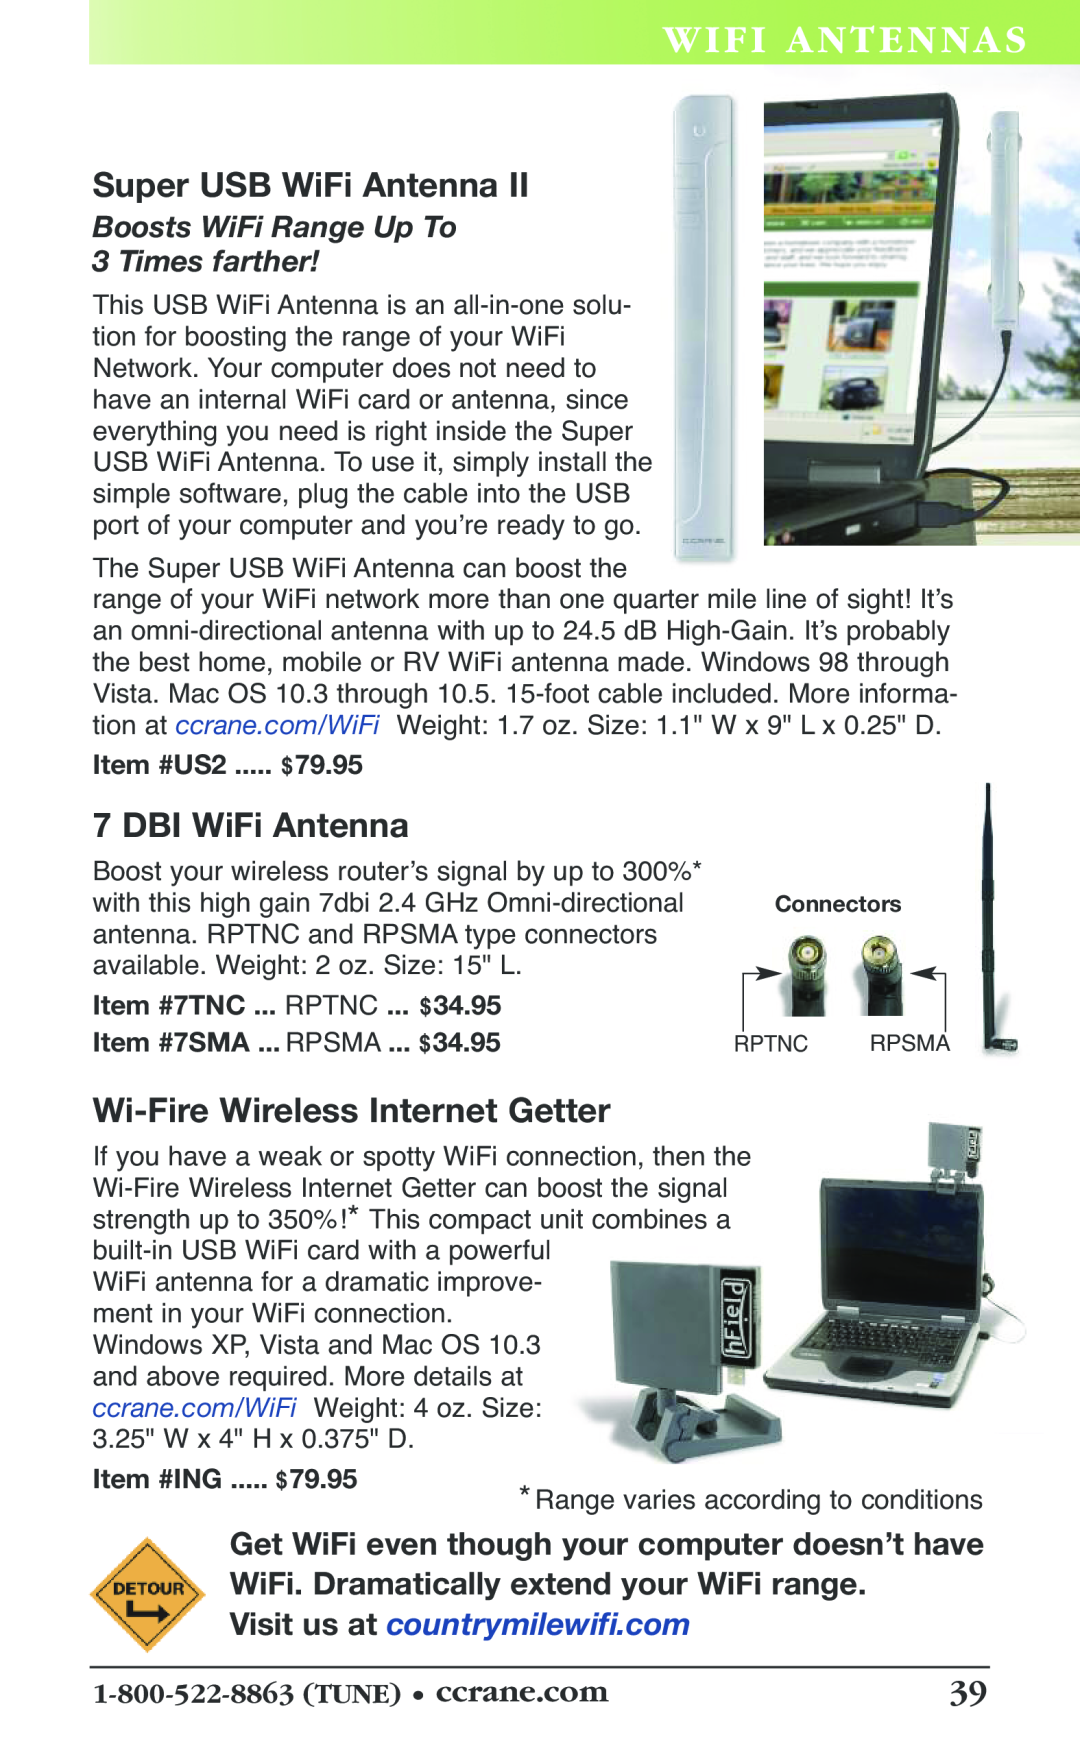 C. Crane 19f manual Wi Fi An Ten Nas, Super USB WiFi Antenna, DBI WiFi Antenna, Wi-FireWireless Internet Getter 